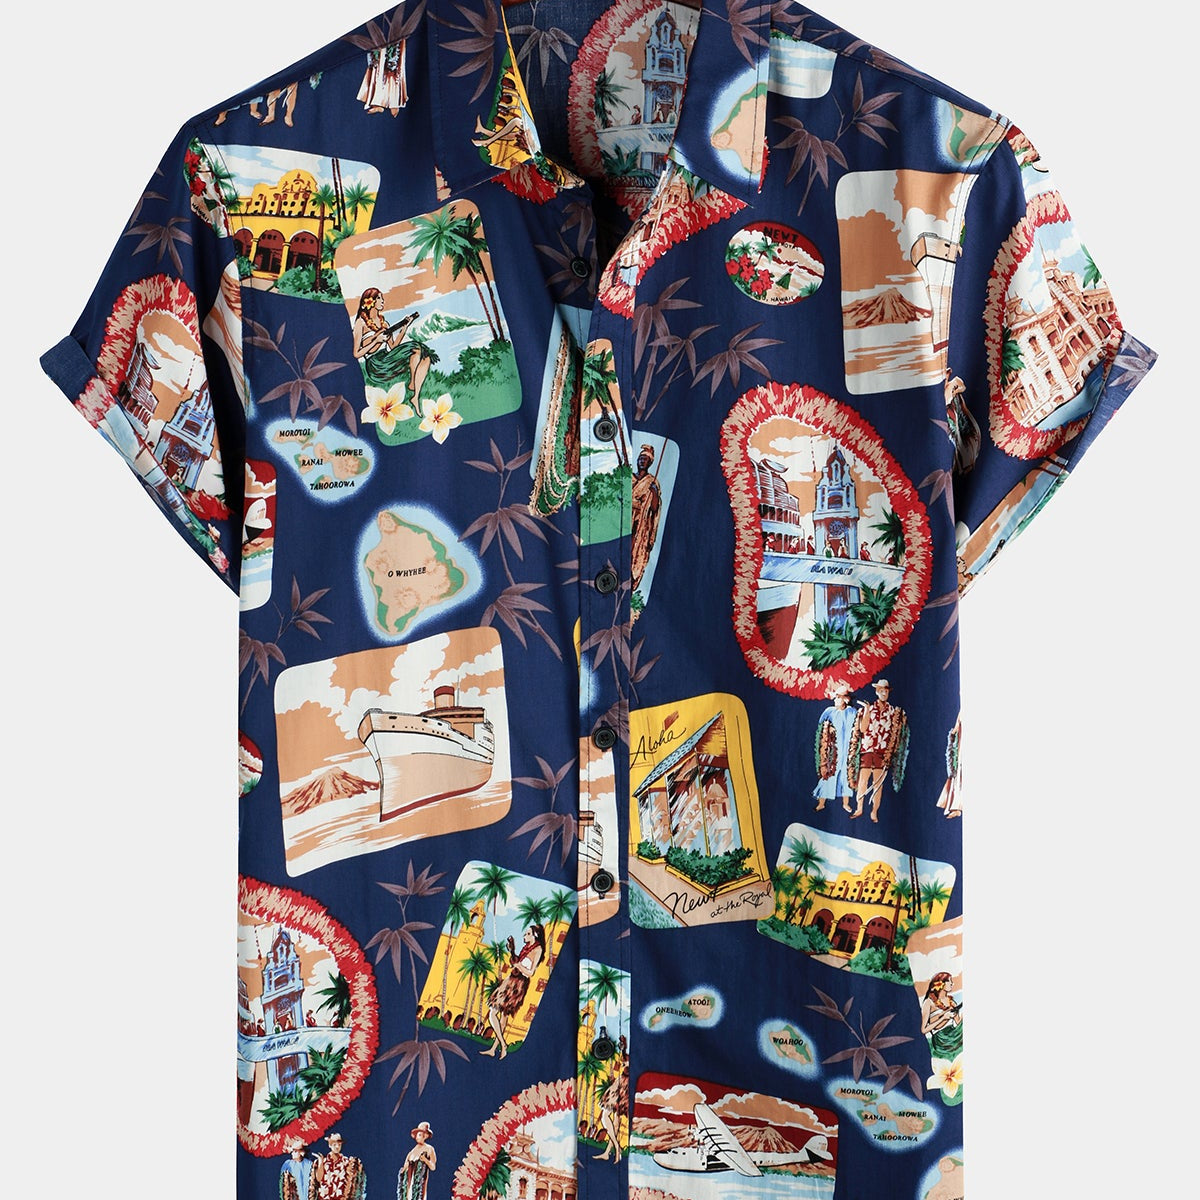 Men's Casual Hawaiian Beach Vacation Short Sleeve Shirt